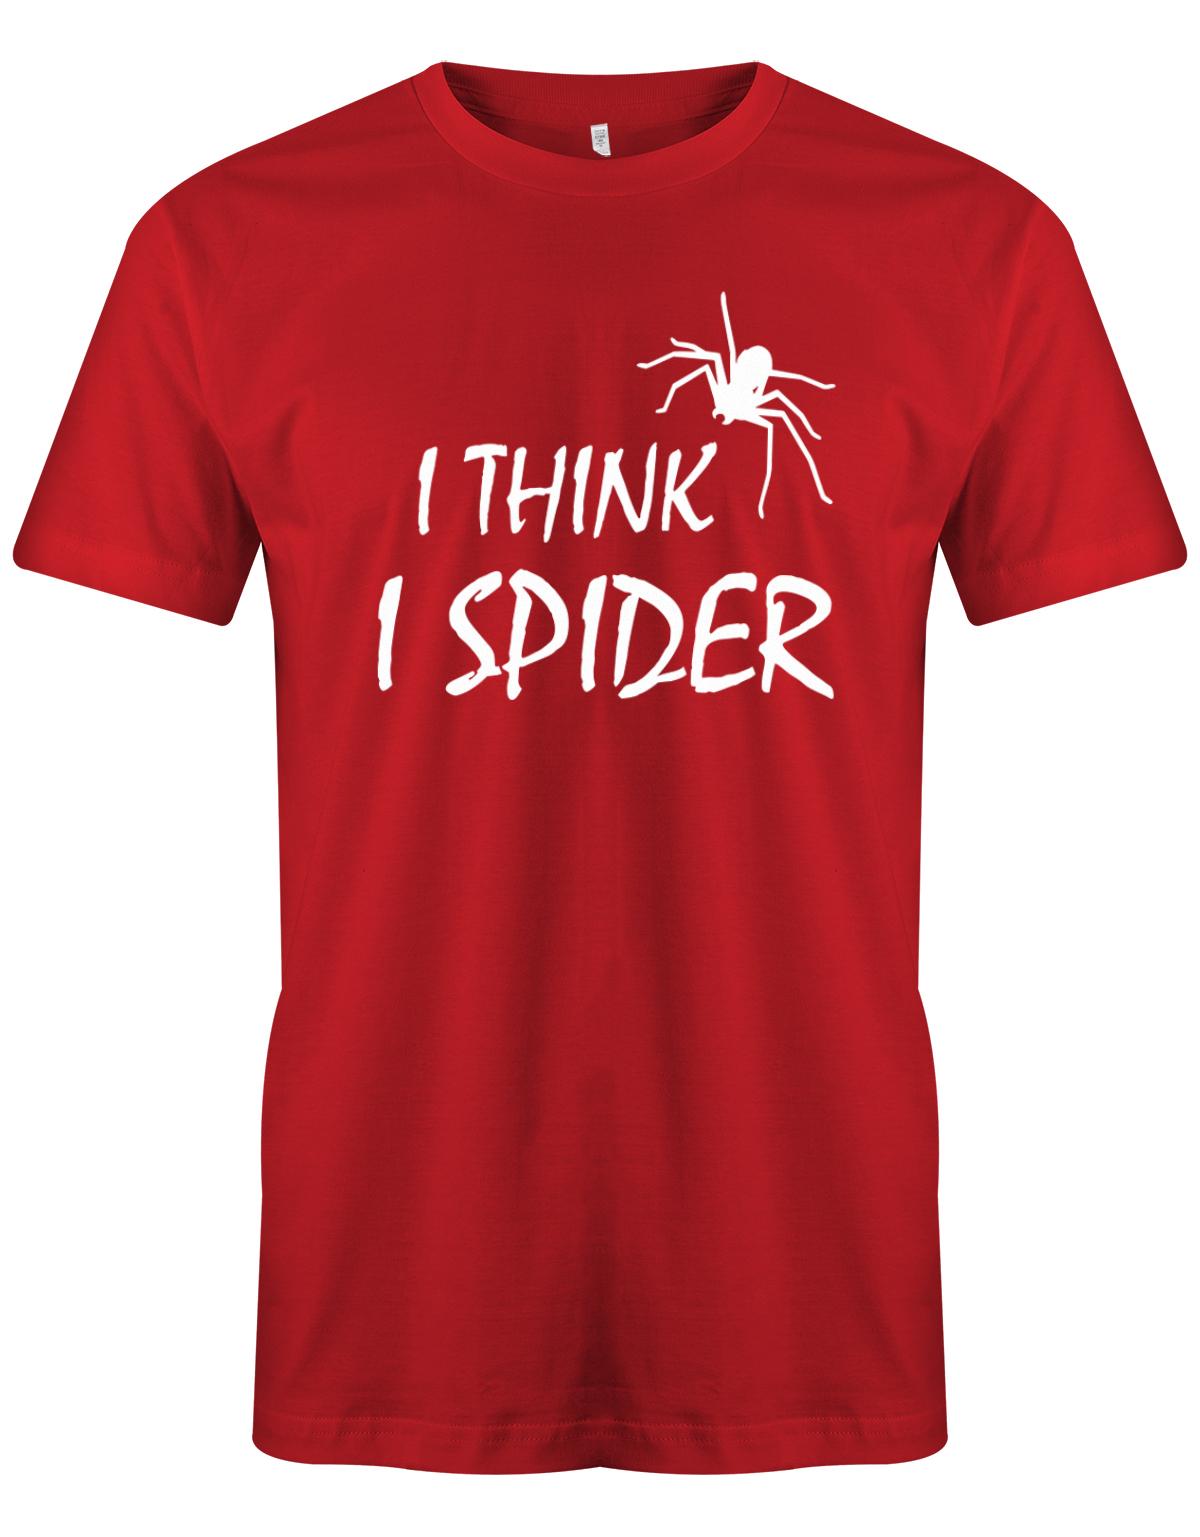 I-think-i-spider-herren-Shirt-rot